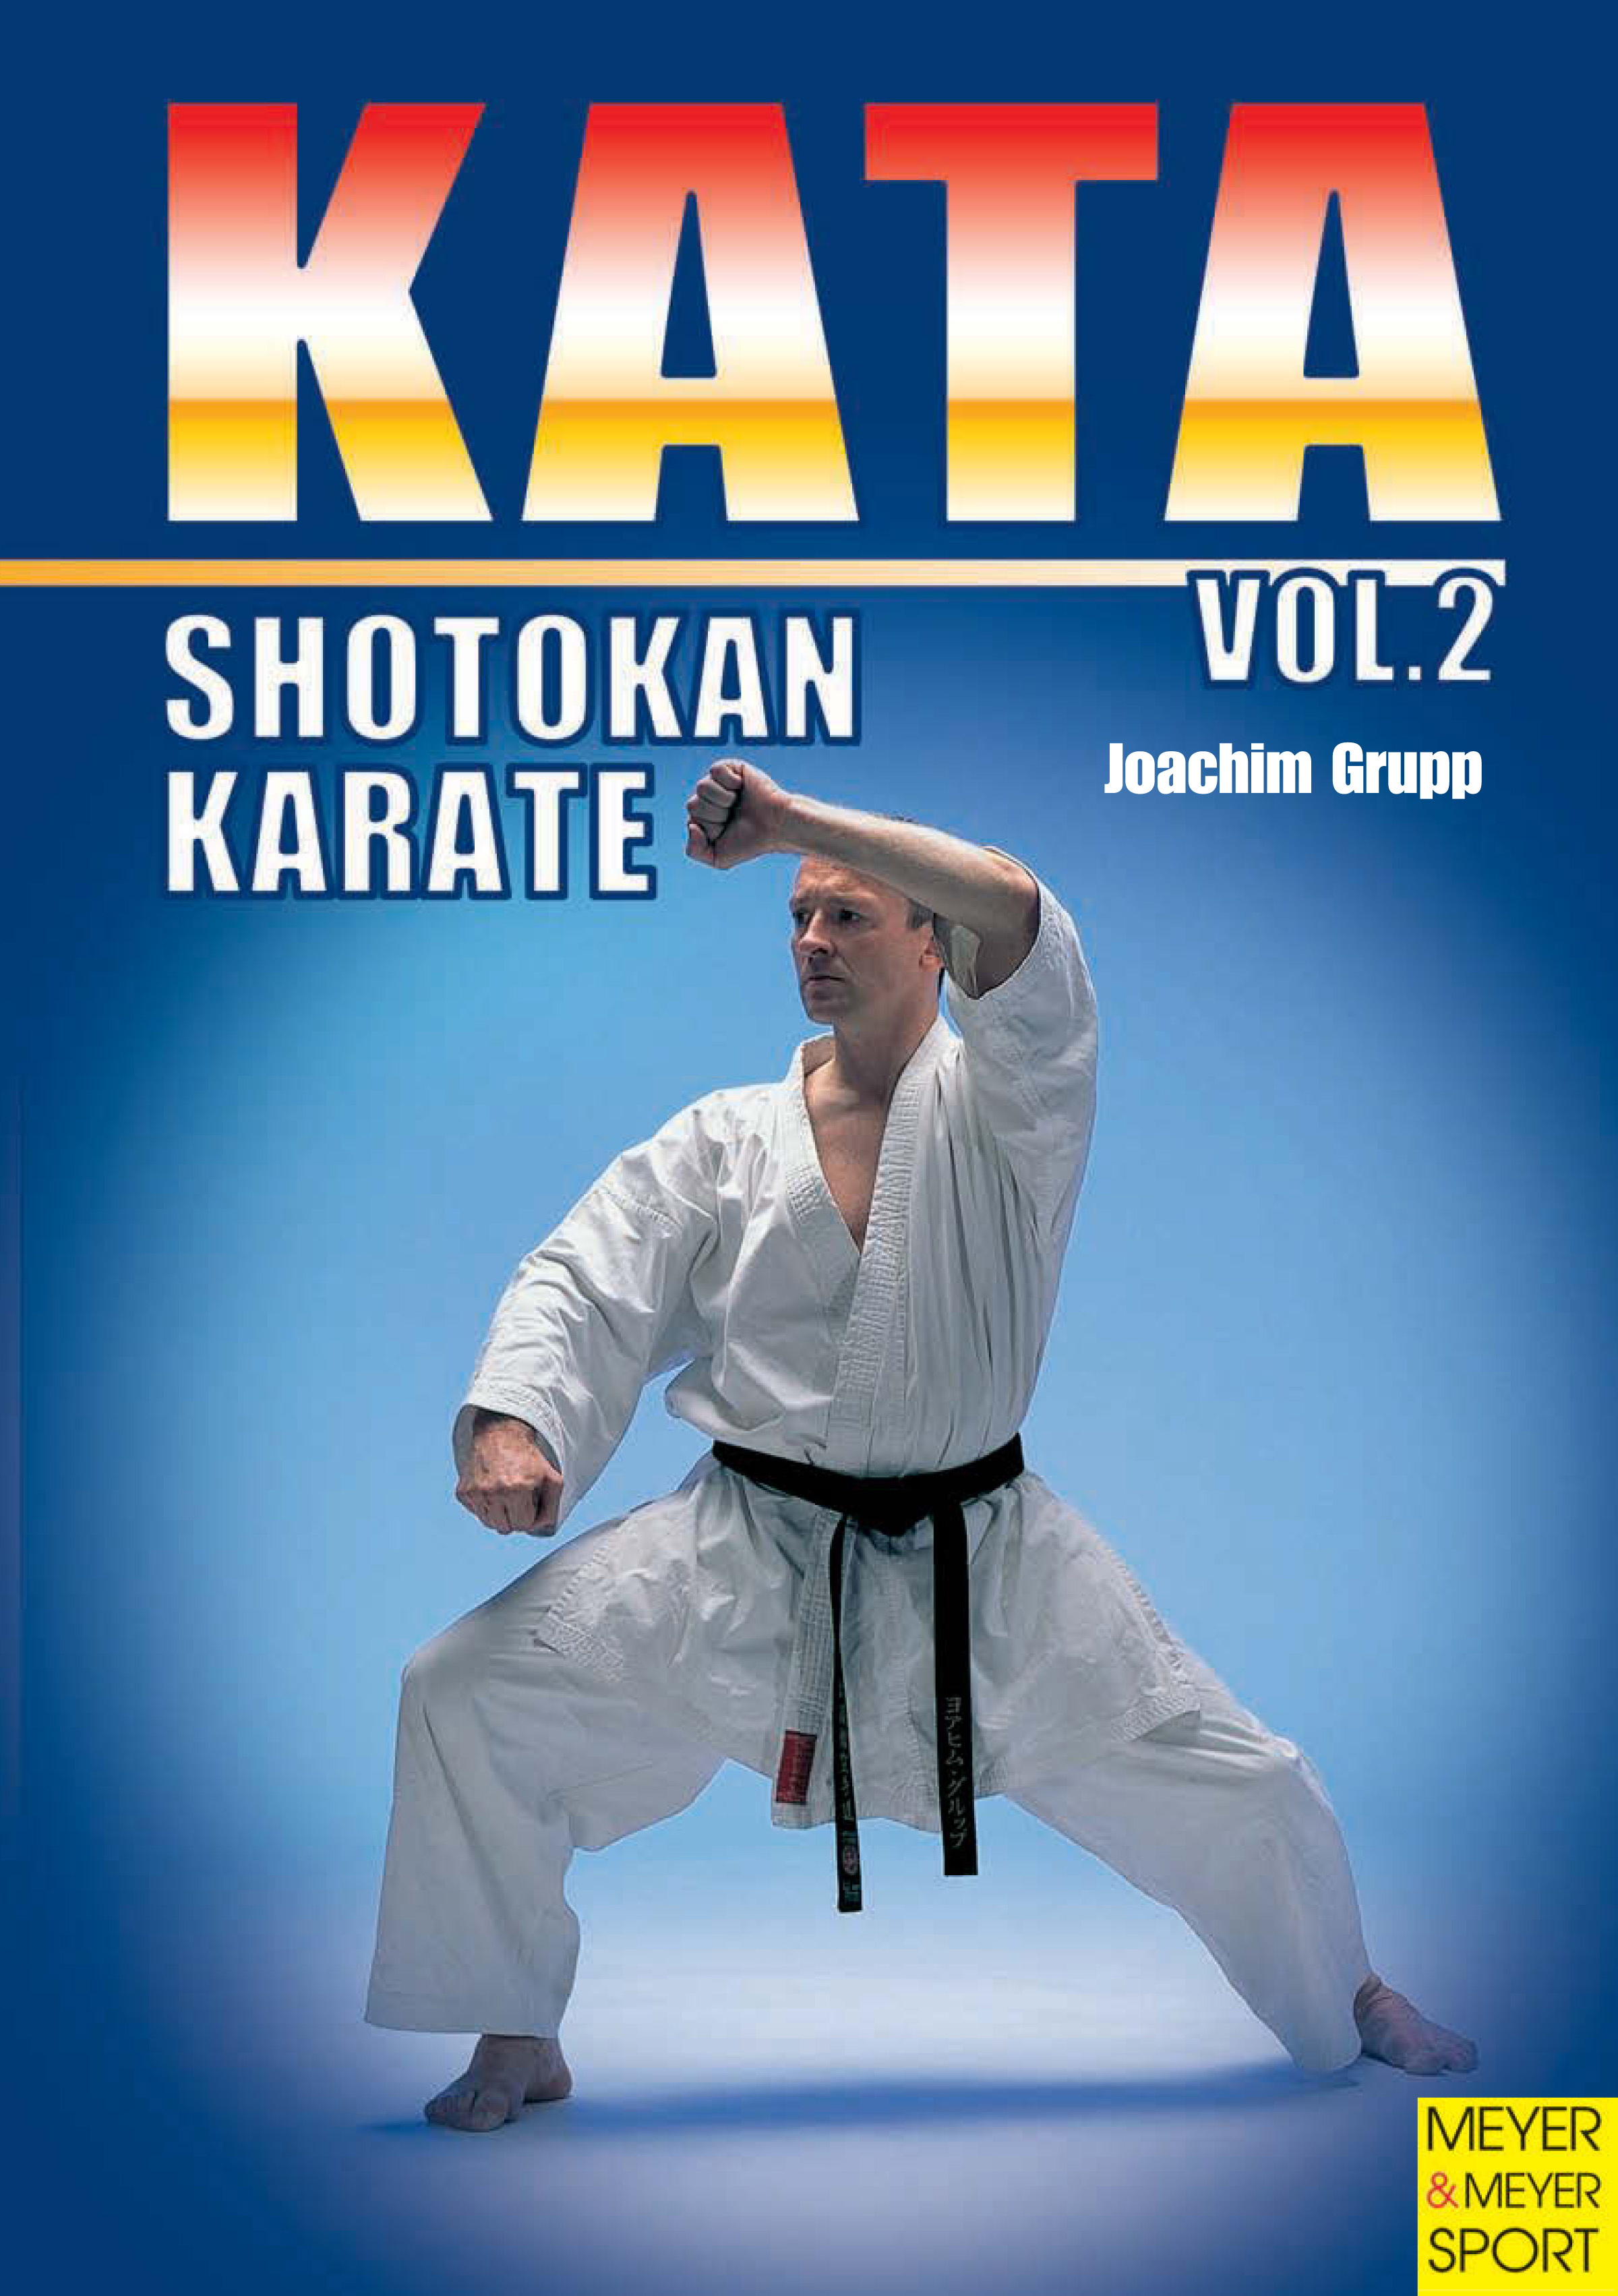 Shotokan Karate Kata (Joachim Grupp - Meyer & Meyer Sport)